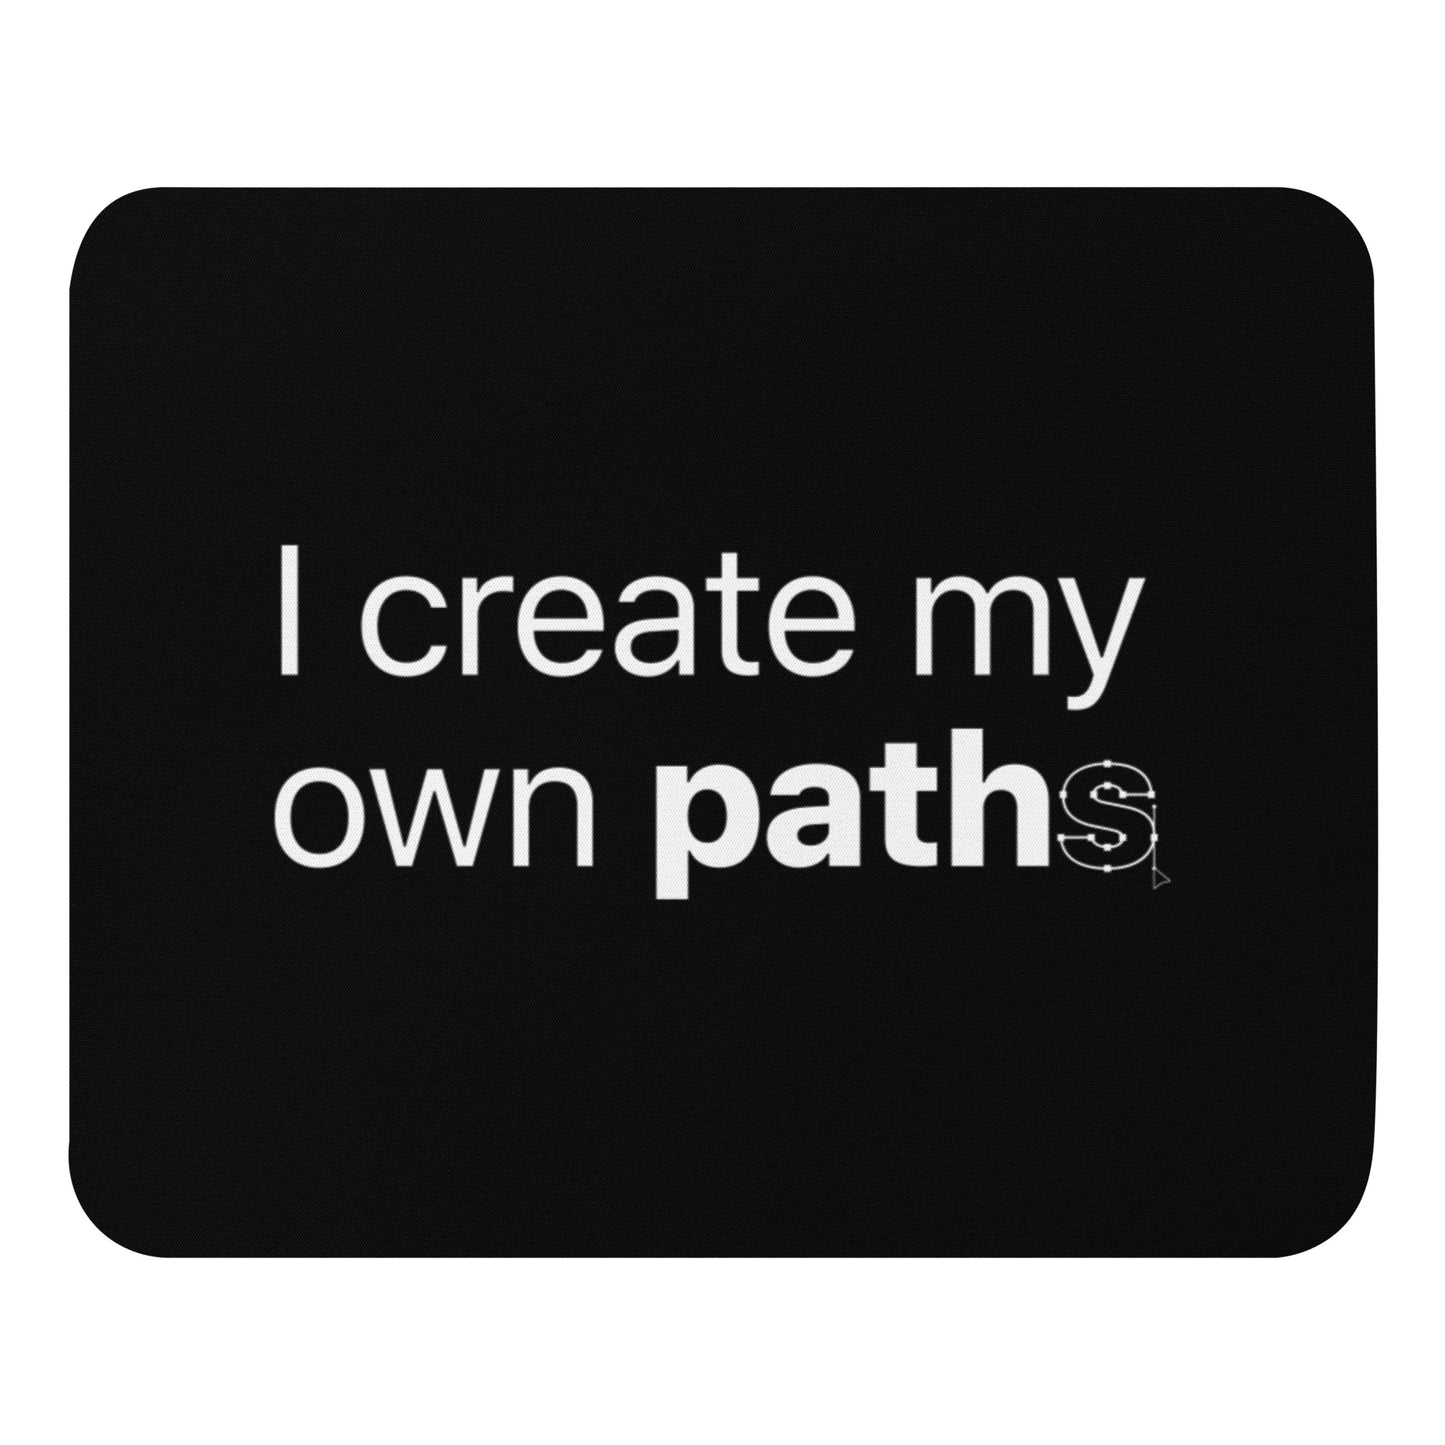 I create my own paths pad